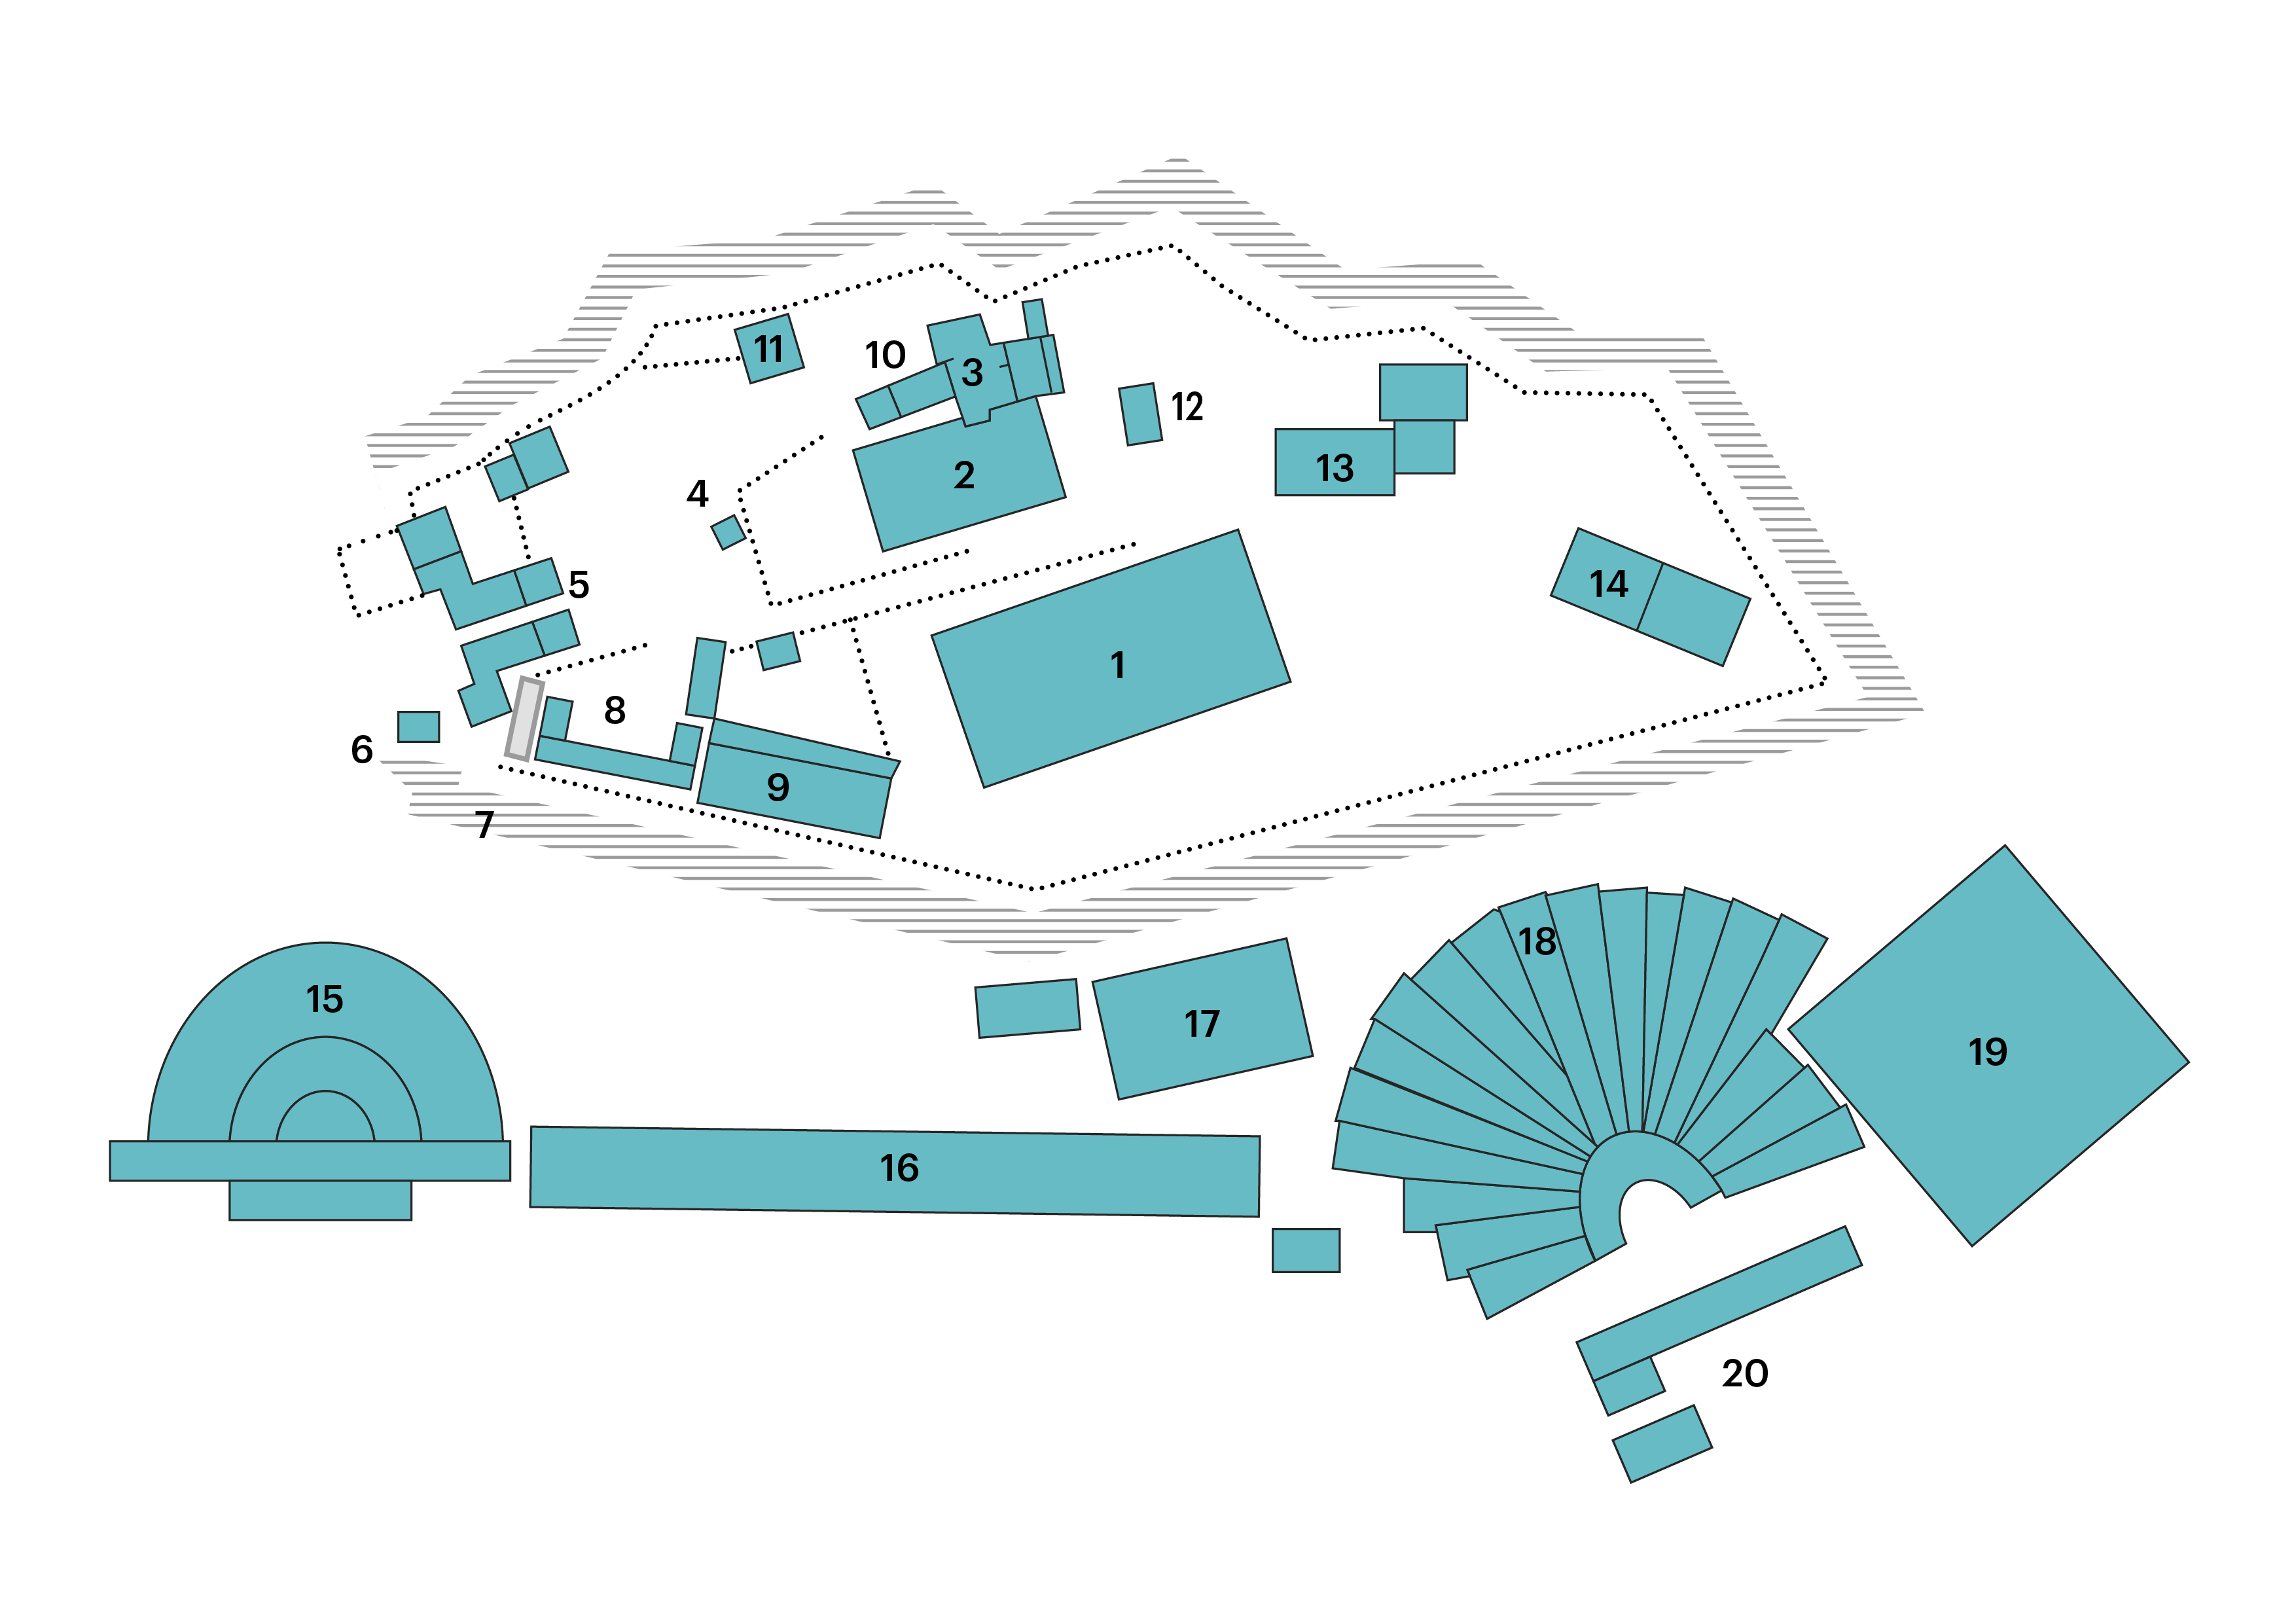 Acropolis Map